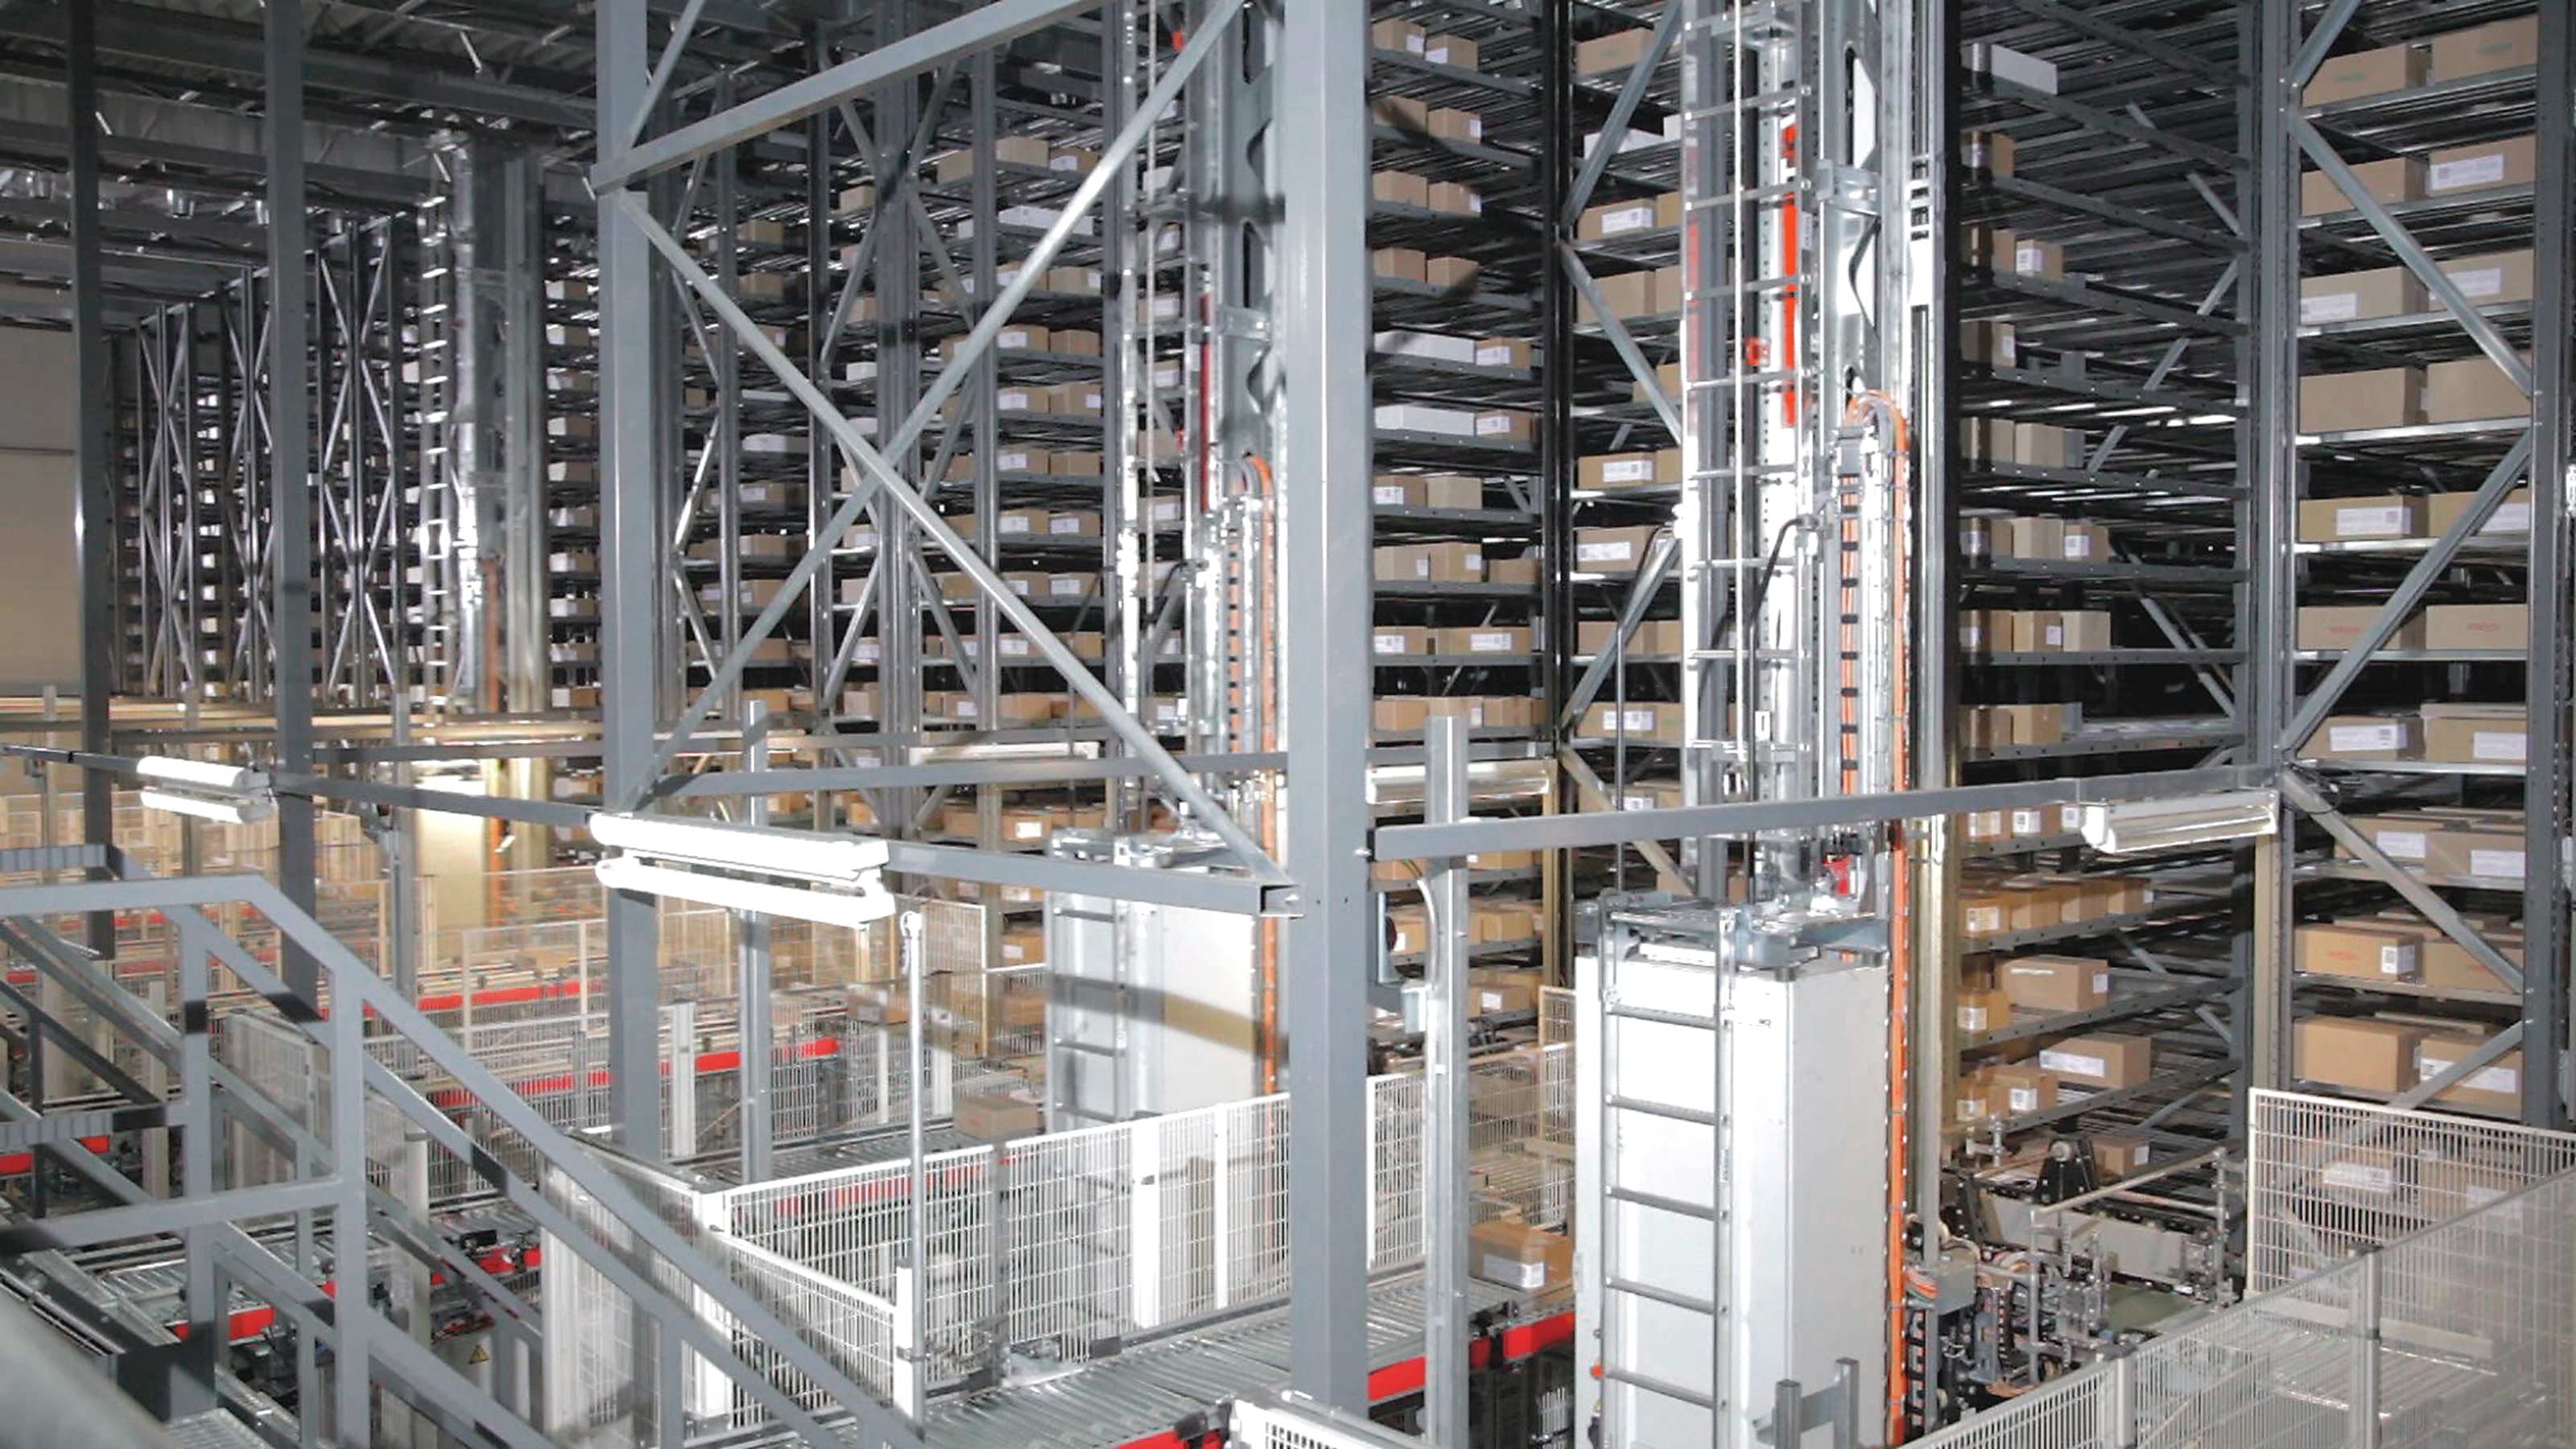 18 Swisslog stacker cranes inside the apetito frozen food warehouse